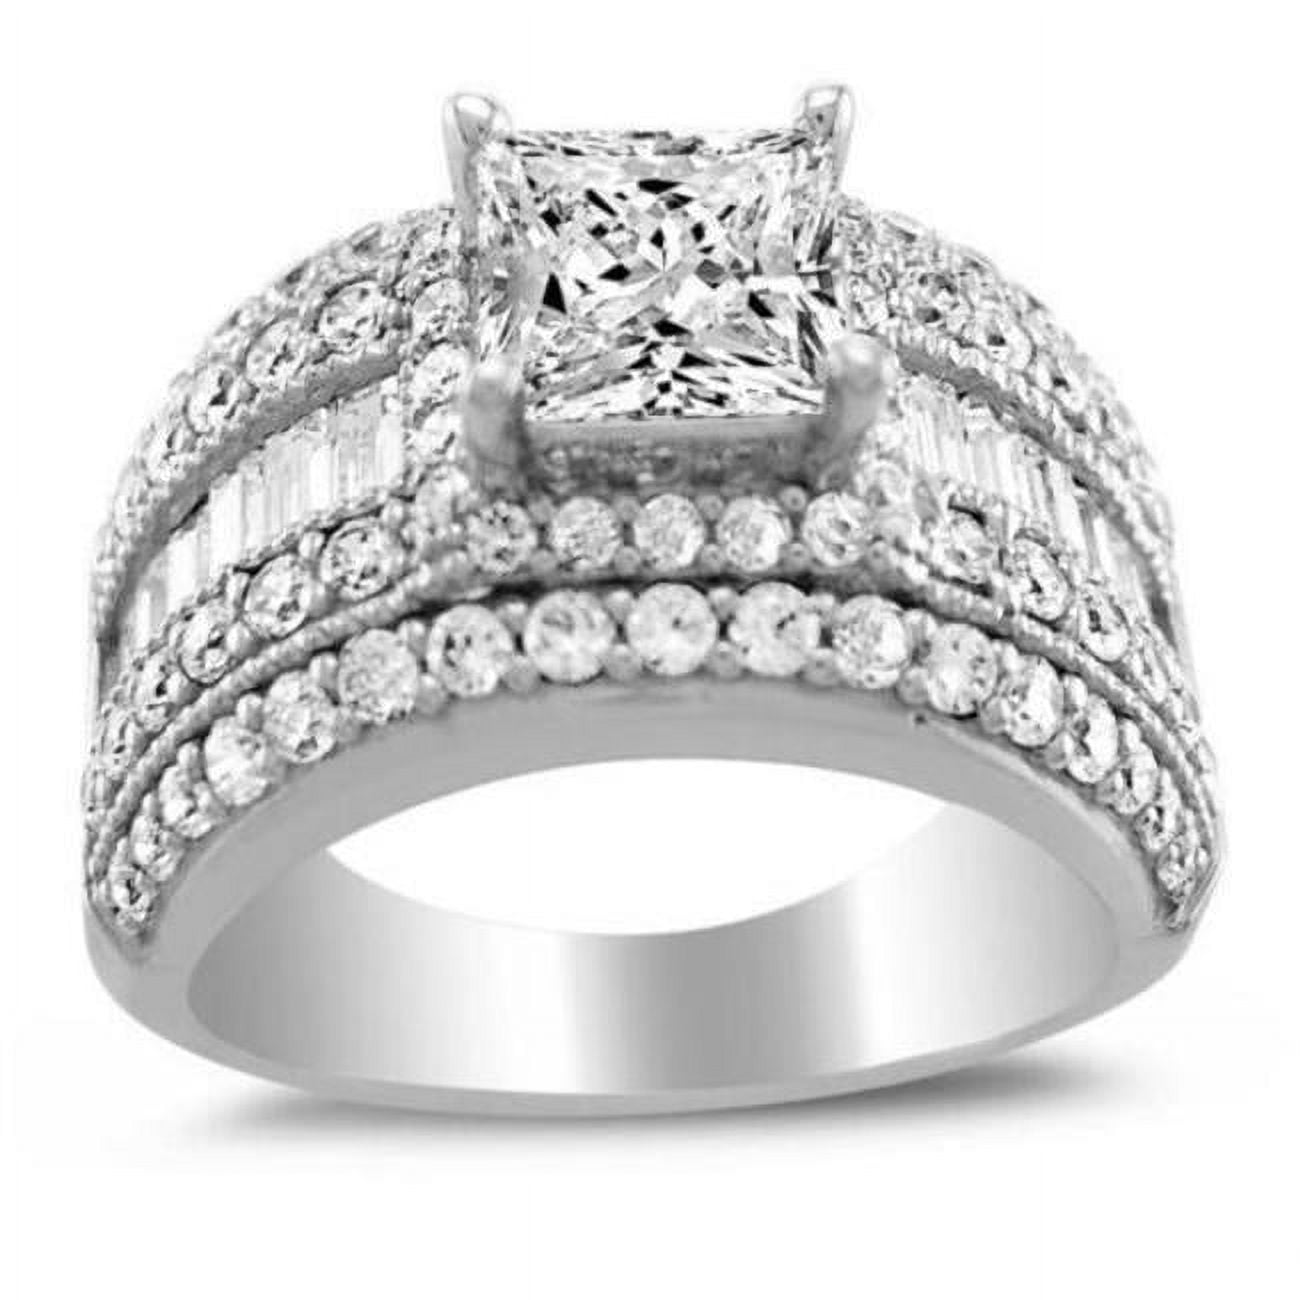 OS0065-RG-sz5.5 14K White Gold 2.5CT TGW Princess-cut Diamonette Engagement Ring, Size 5.5 -  Precious Stars, OS0065-RG_sz5.5